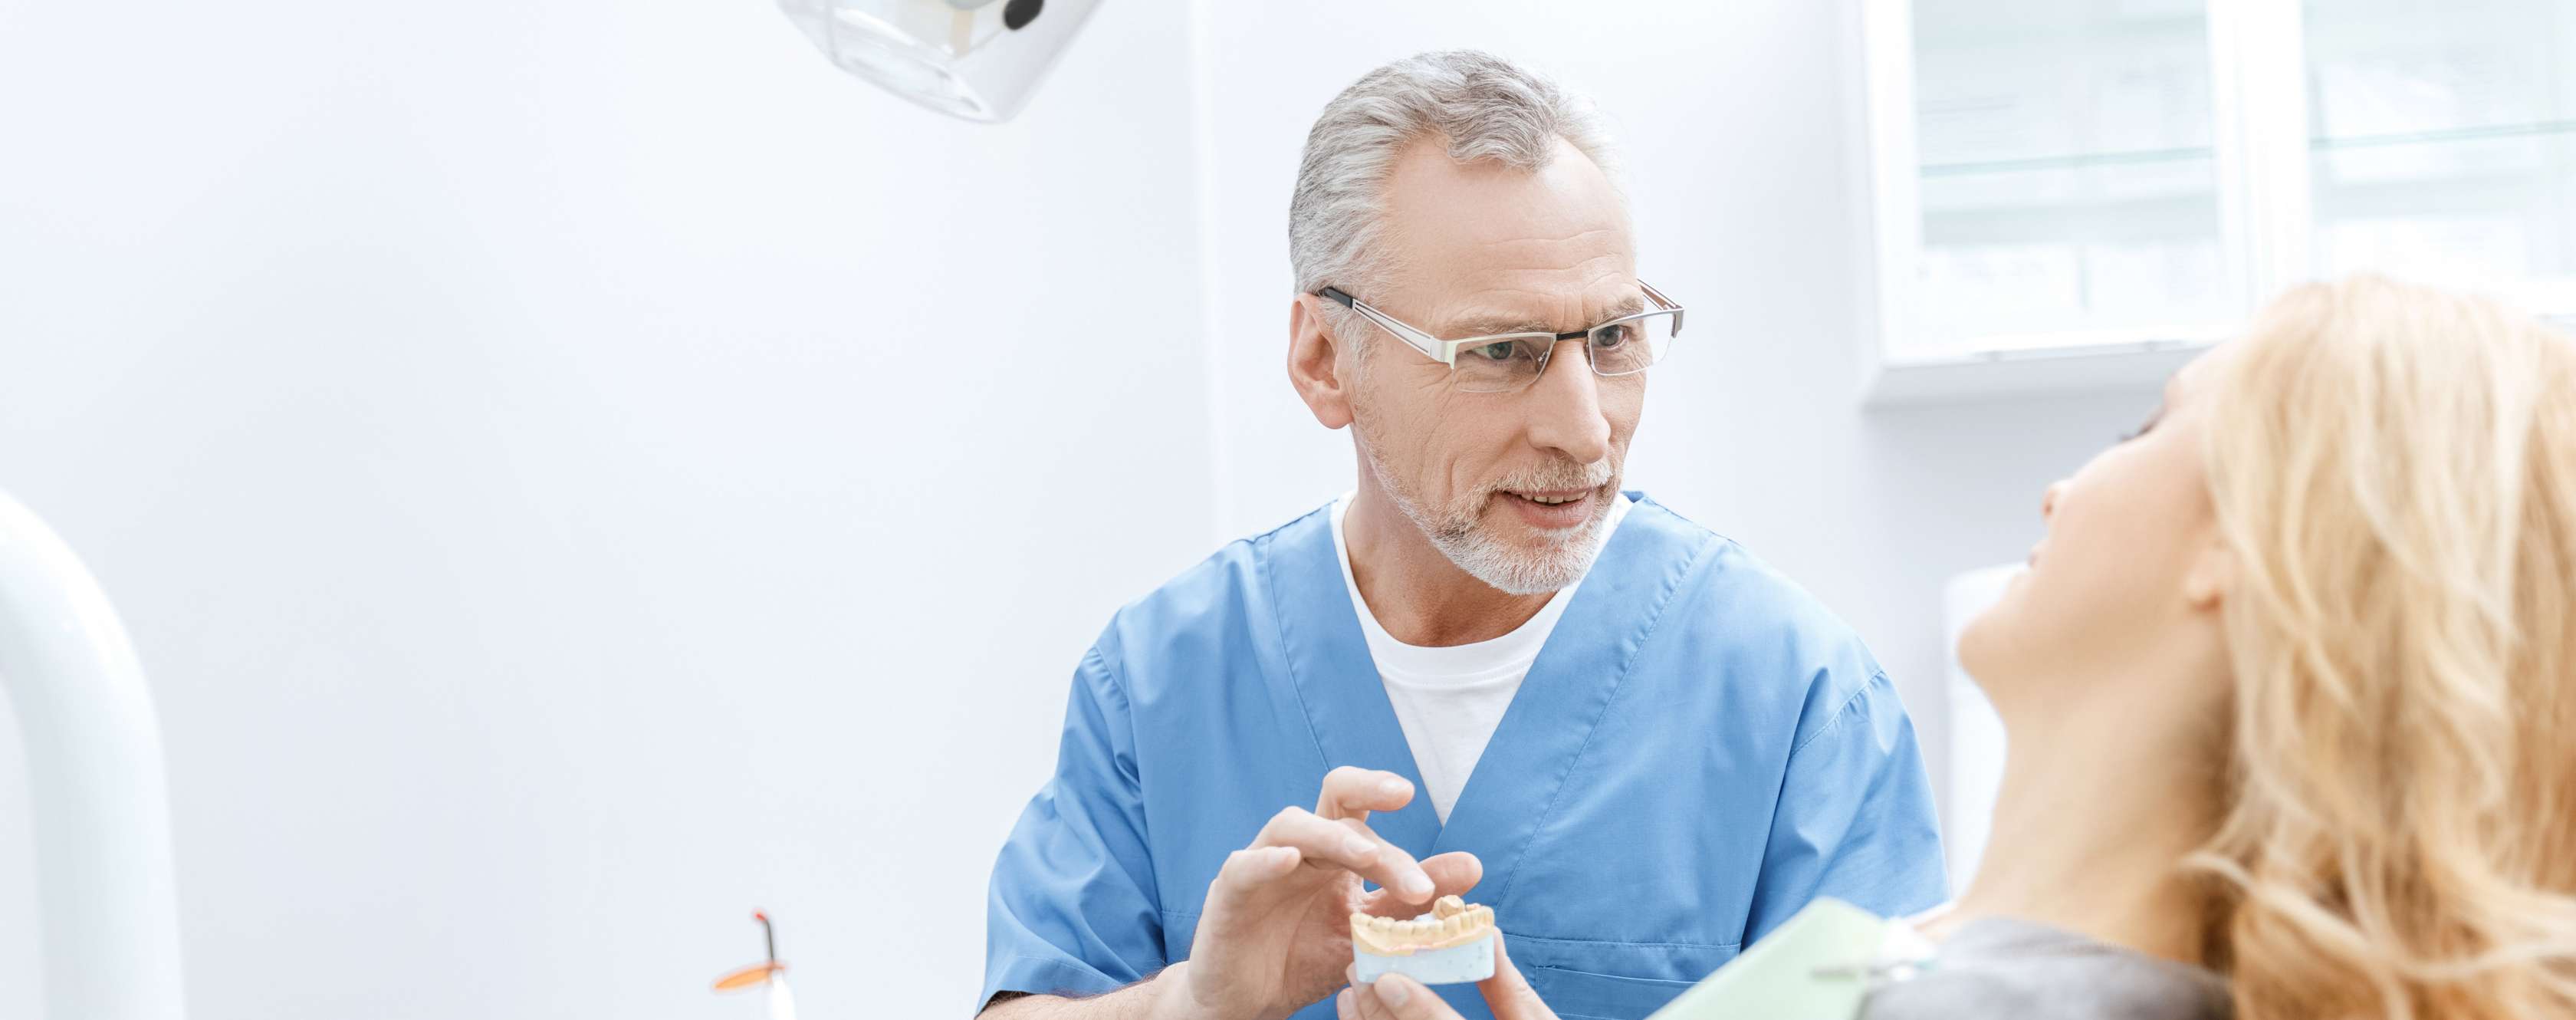 Zahnarztversicherung: Zahnarzt bespricht Behandlungsplan an einem Gebissmodell